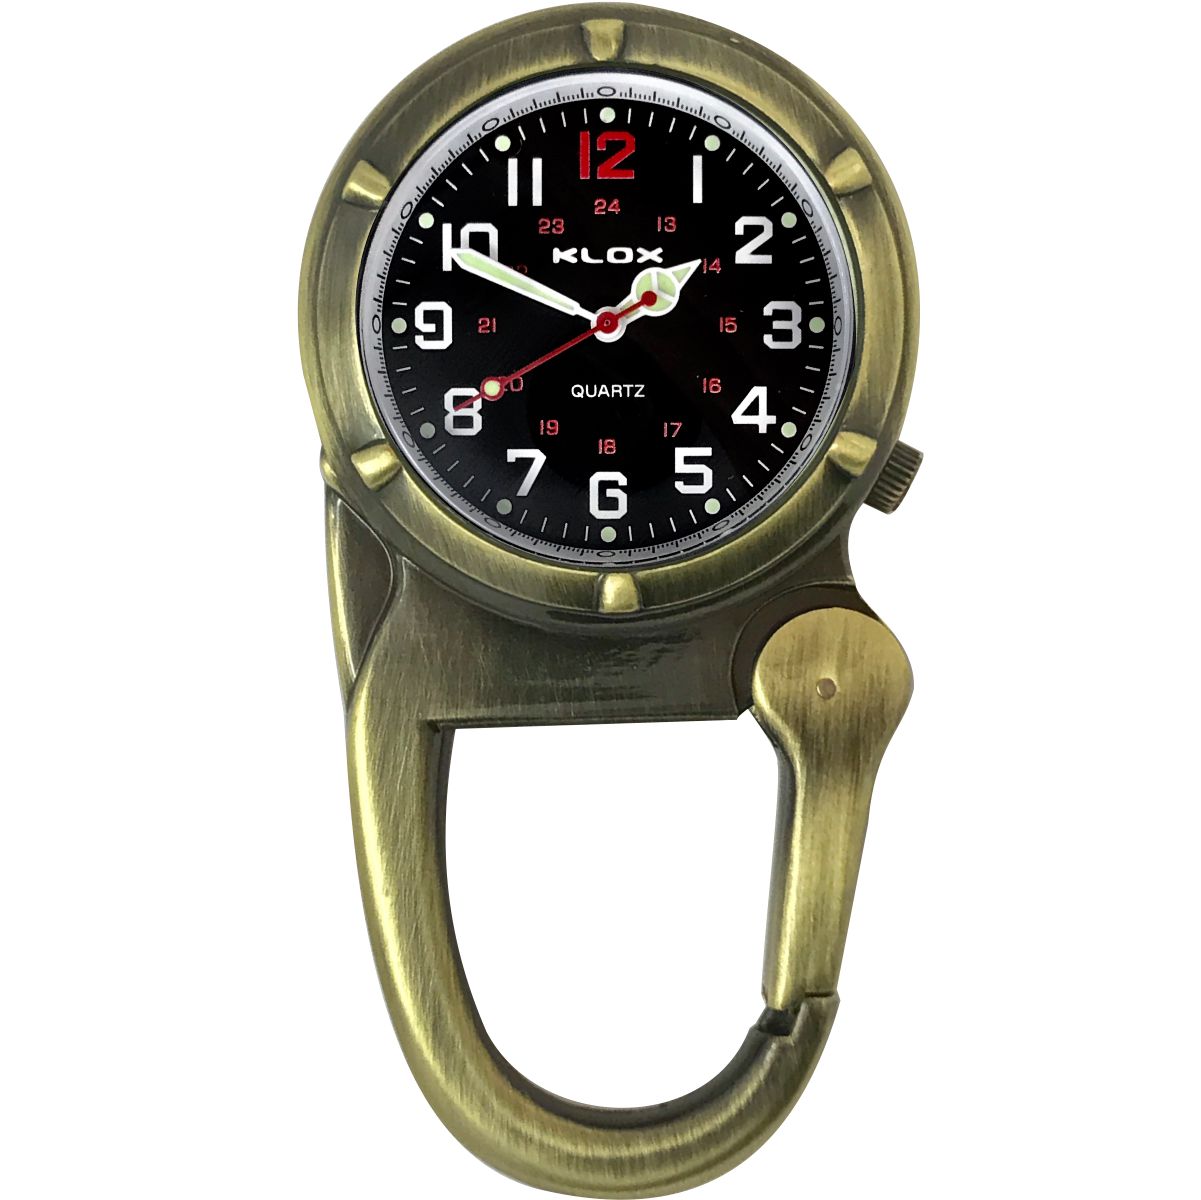 Metal Carabiner Clip Watch - BRASS - BLACK Dial